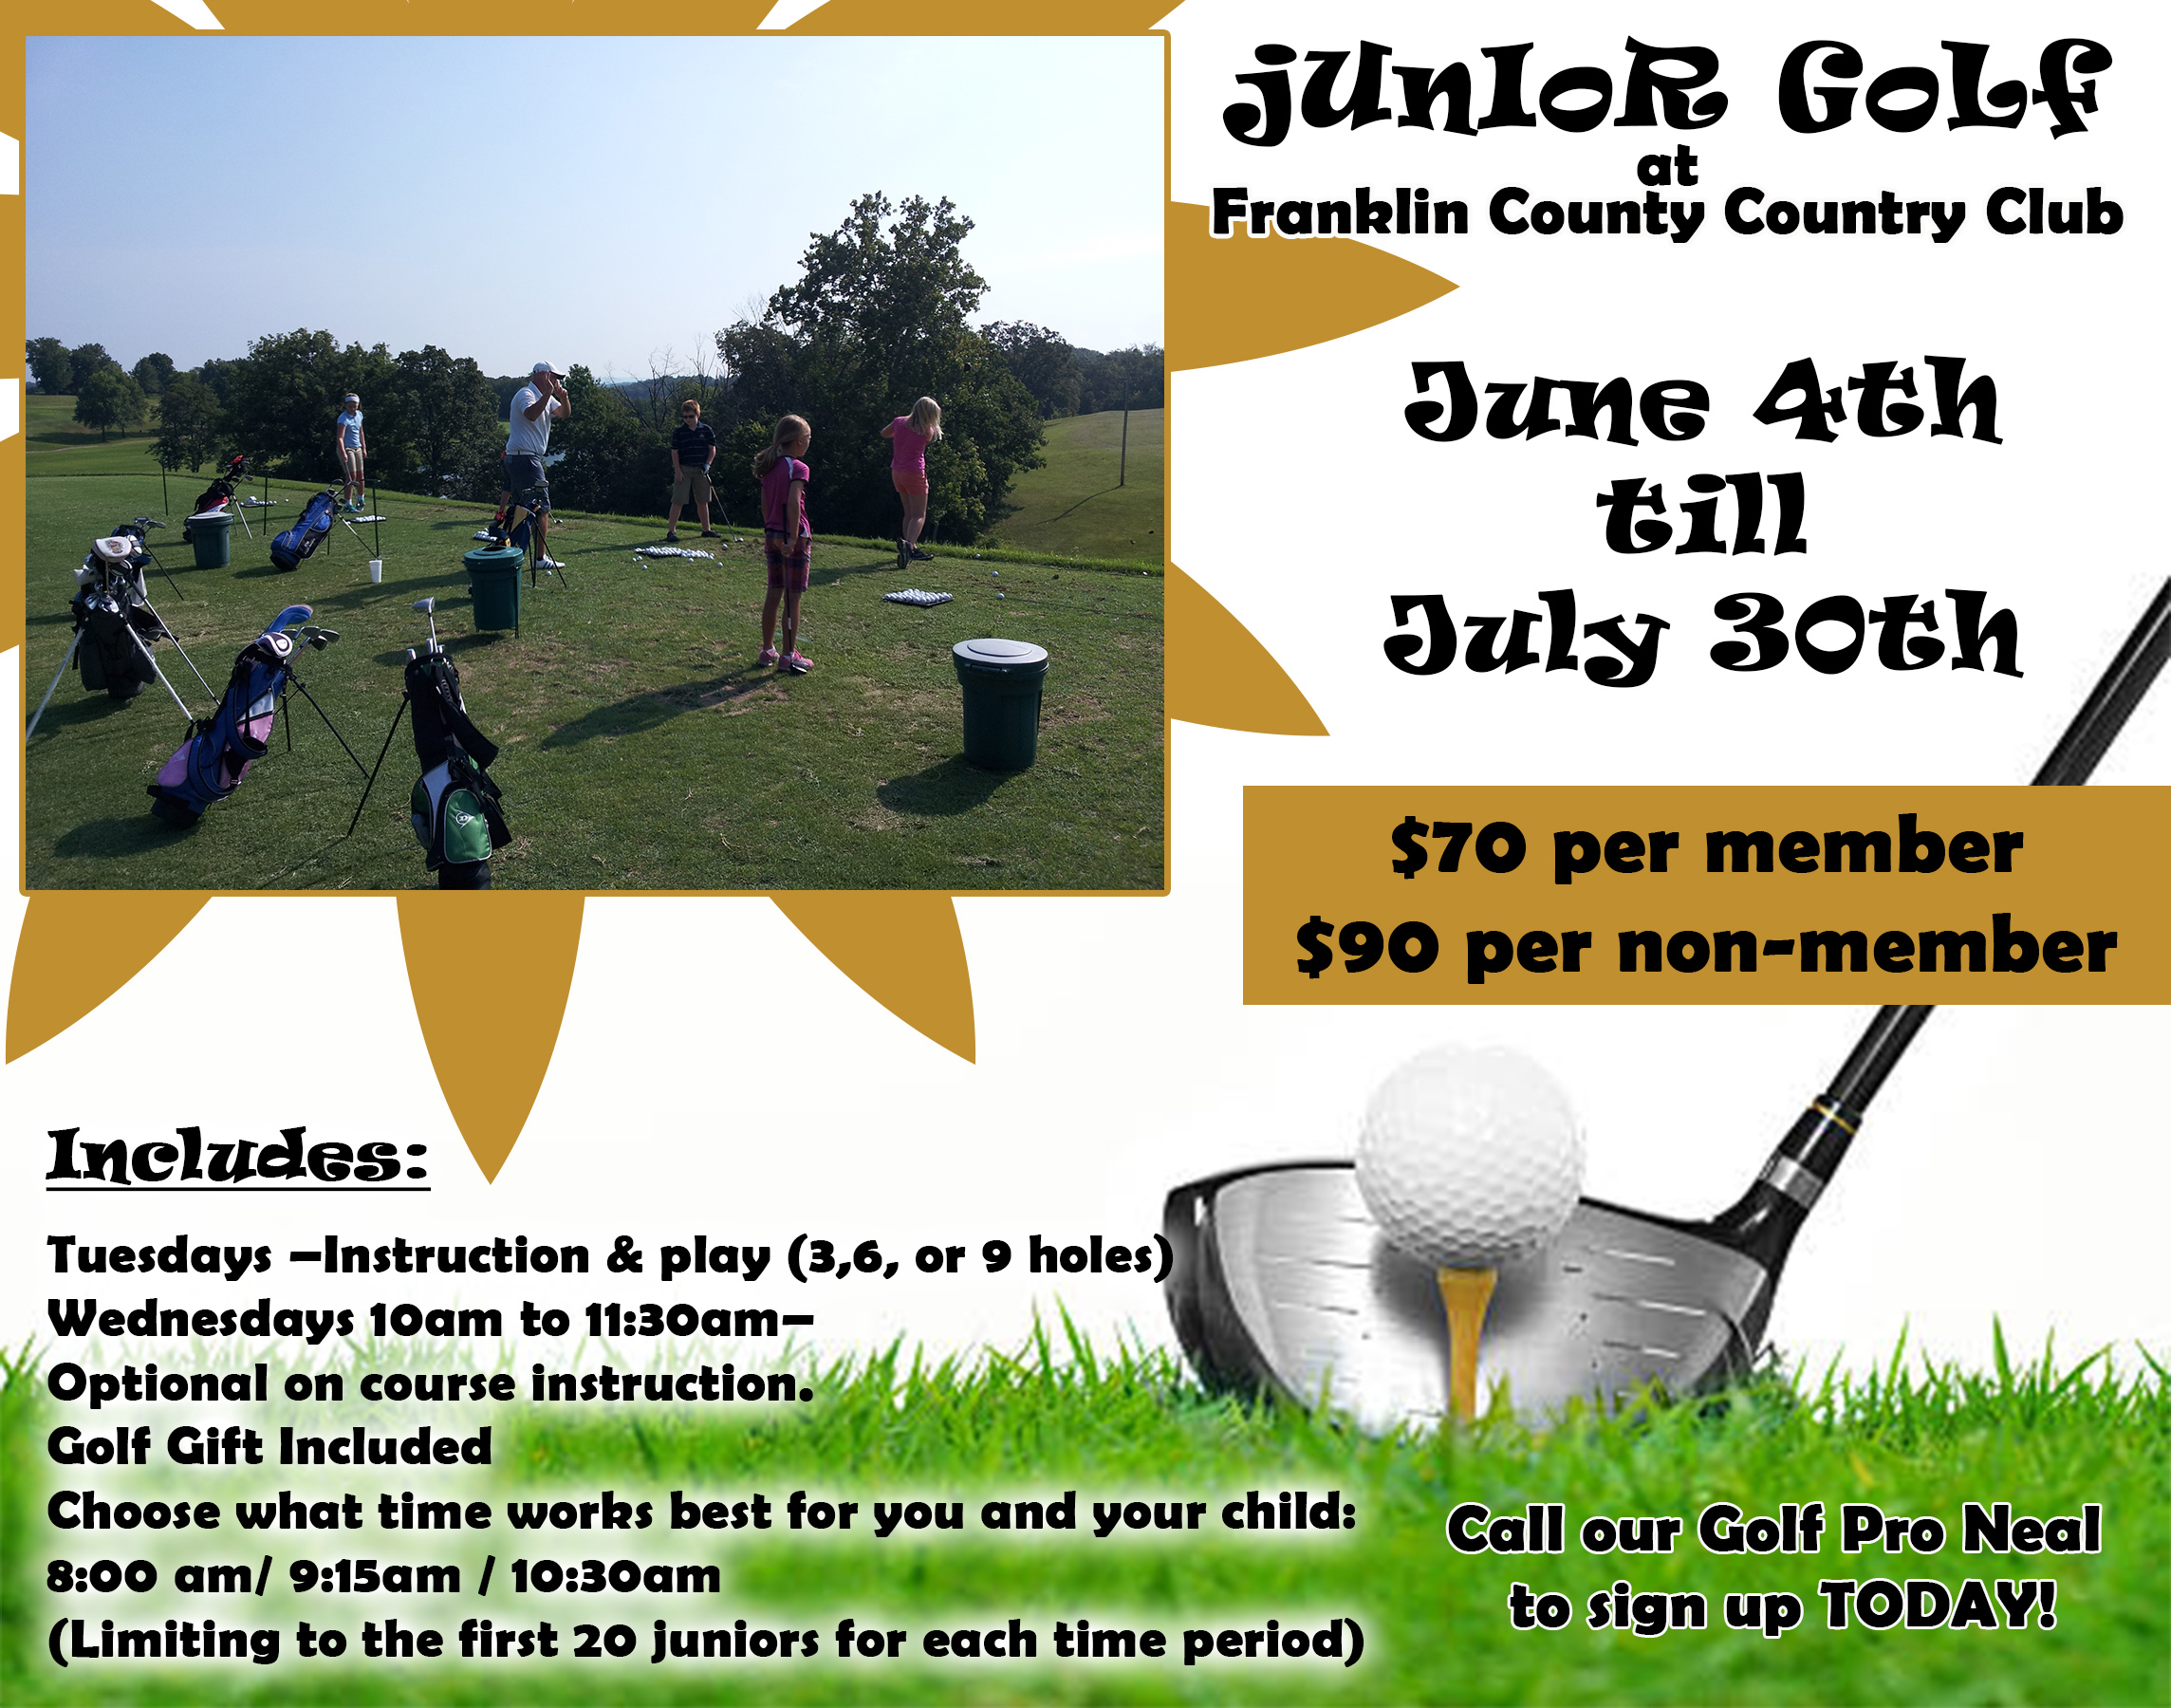 Junior Golf Franklin County Country Club